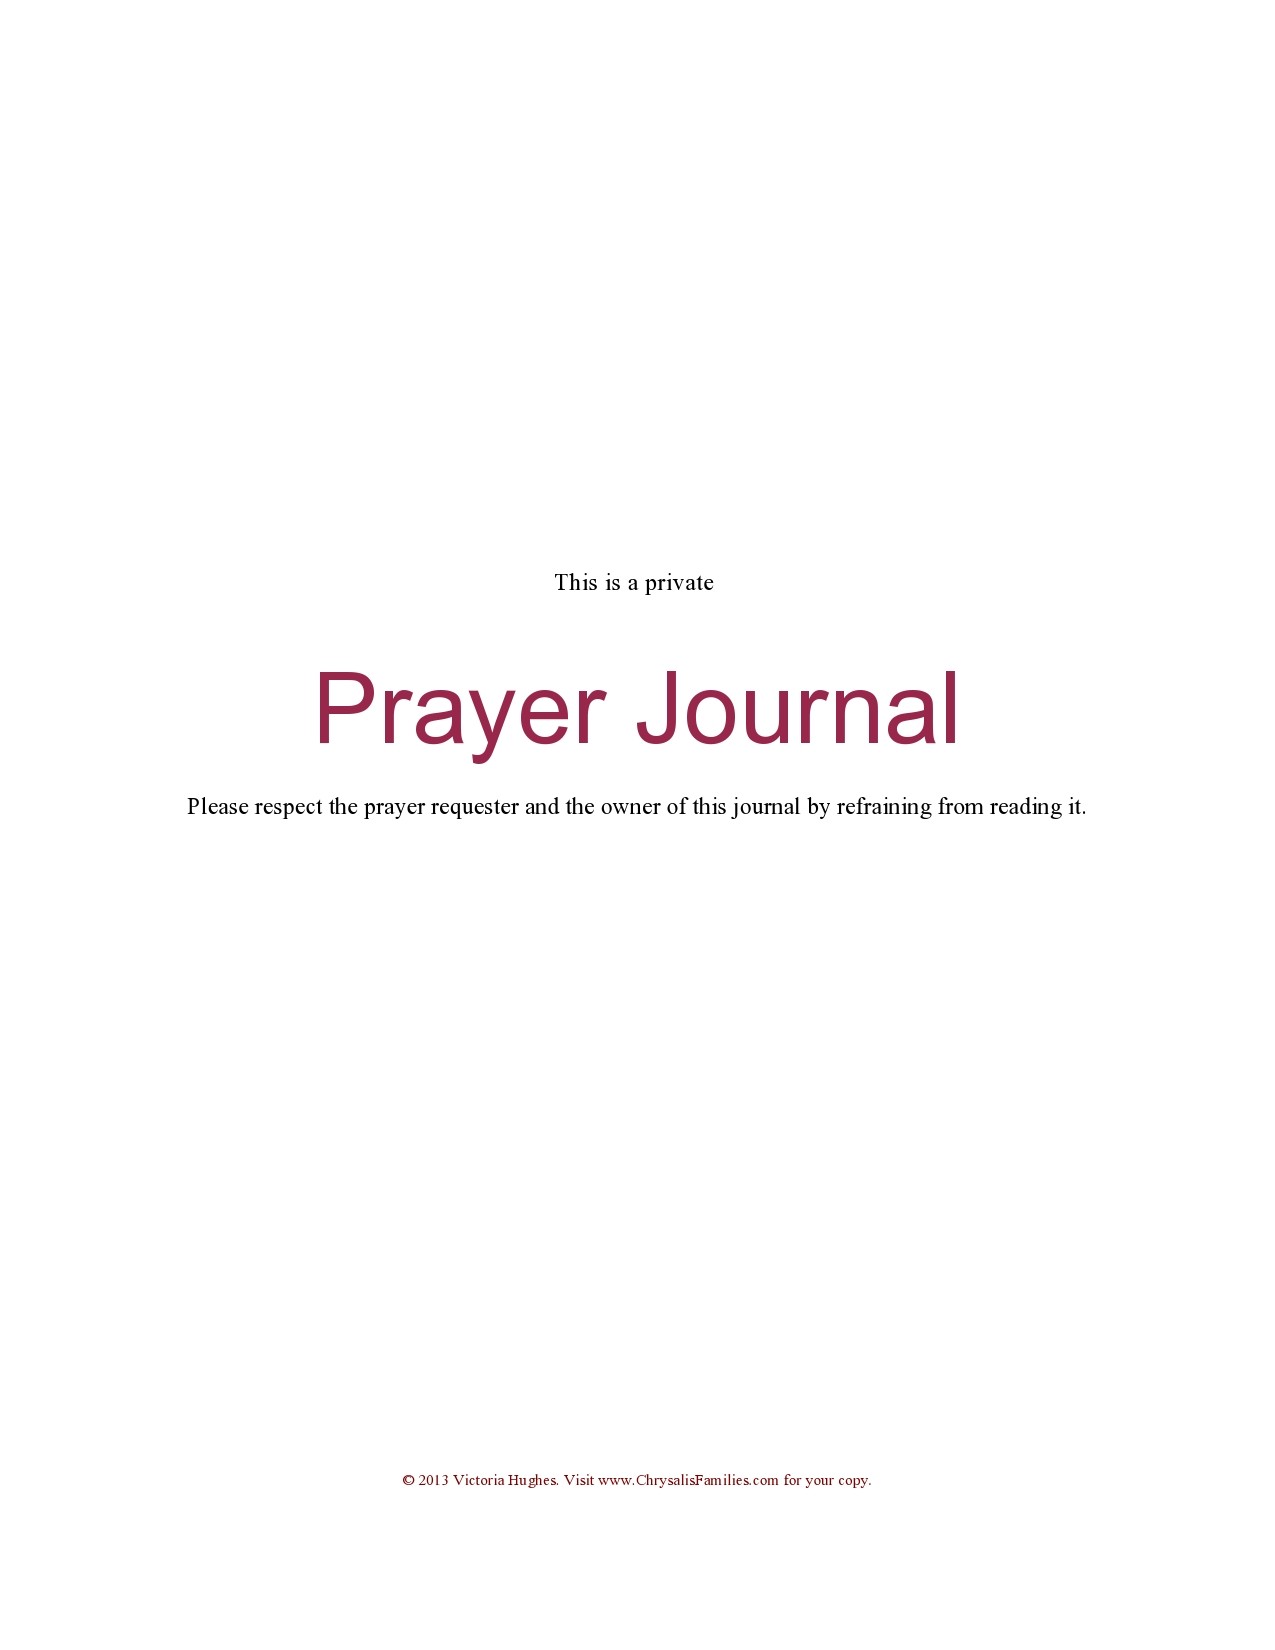 Free prayer journal template 01